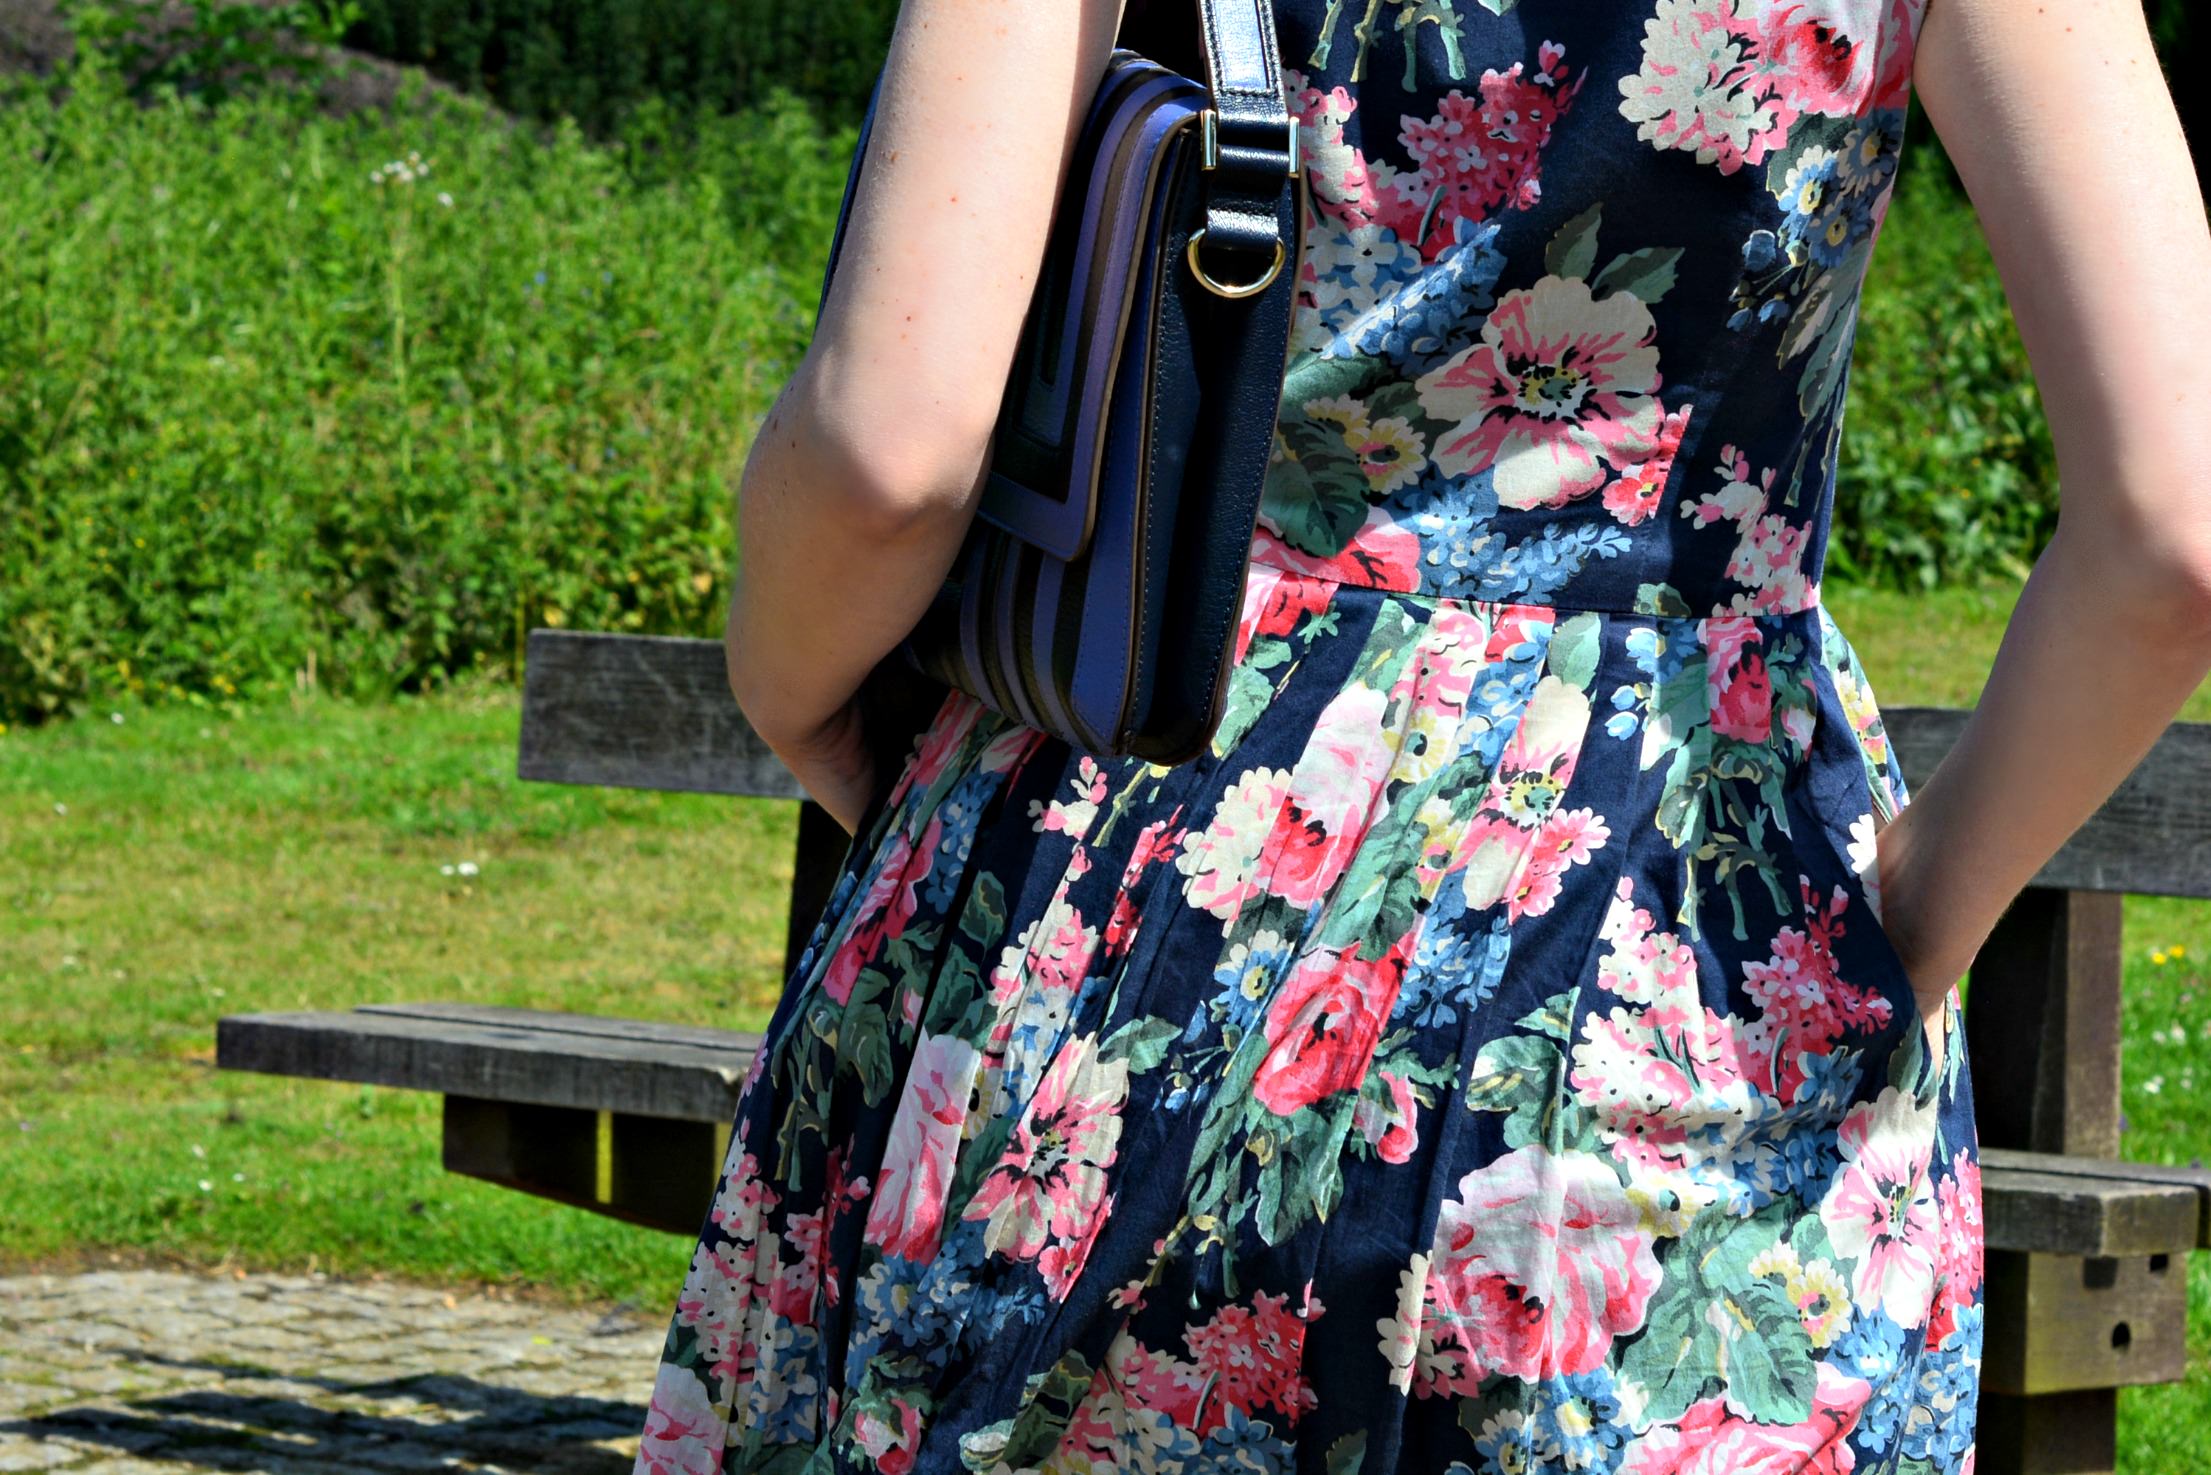 Cath Kidston Bloomsbury dress detail pleats in skirt